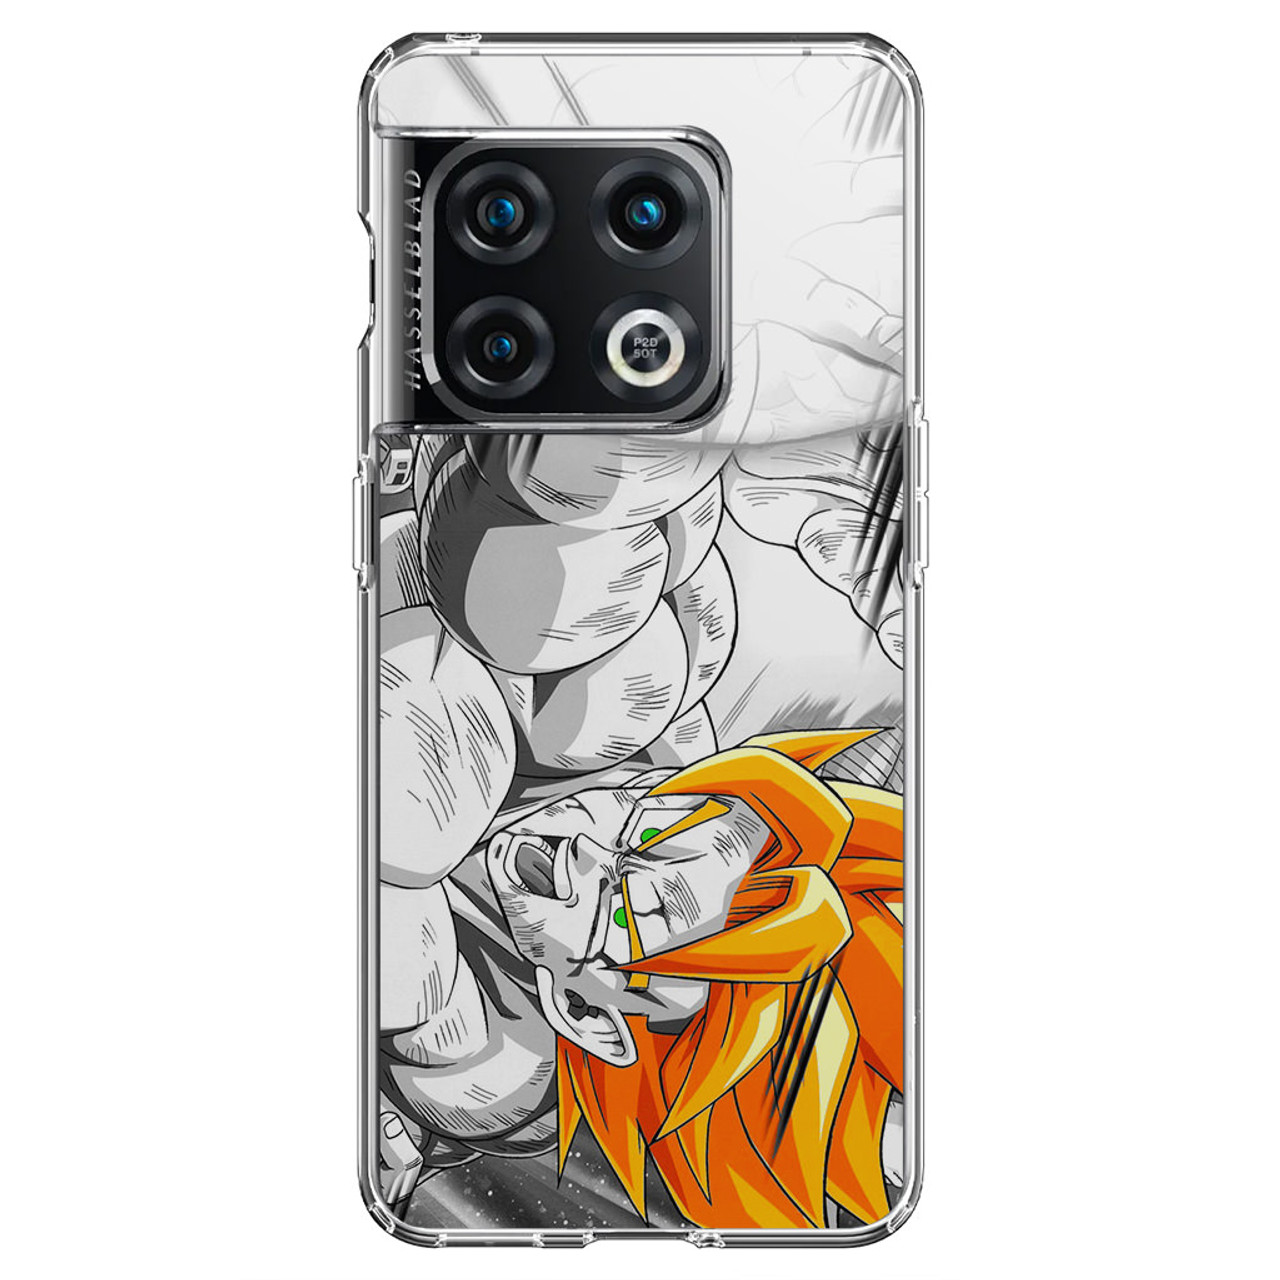 Dragon Ball Z Galaxy S20 FE Clear Case - Goku Portrait